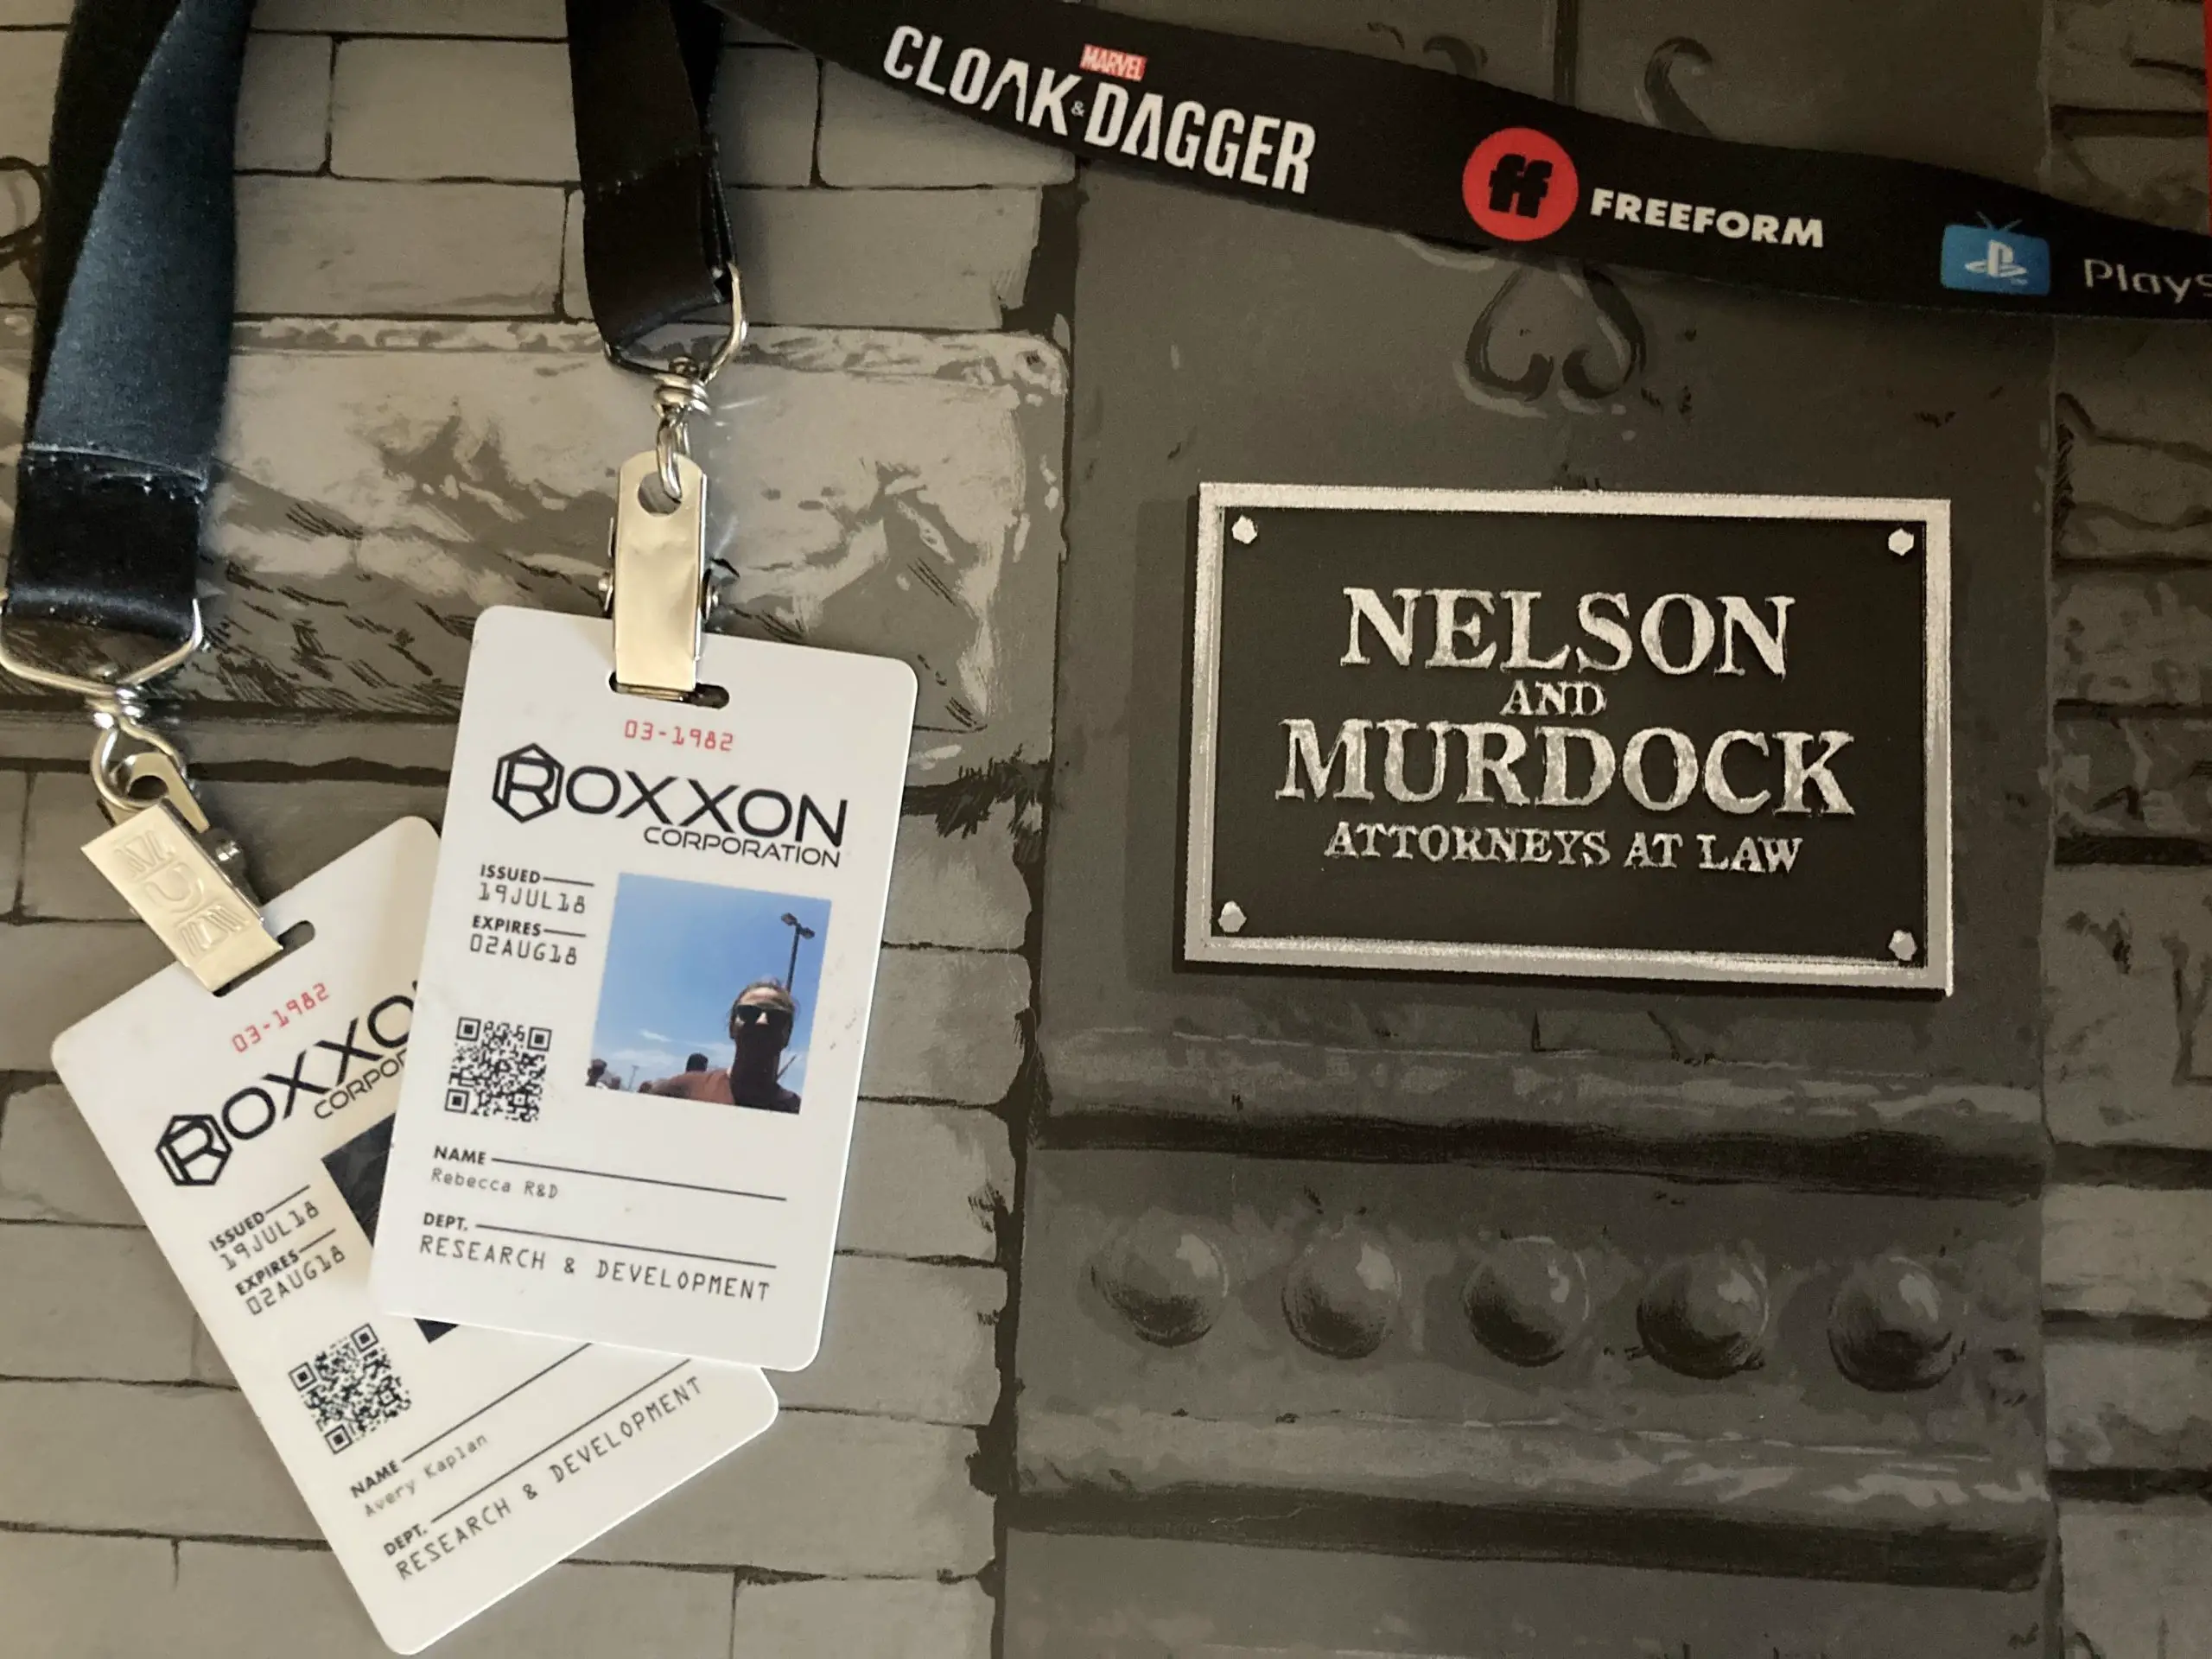 ROXXON Corp badge